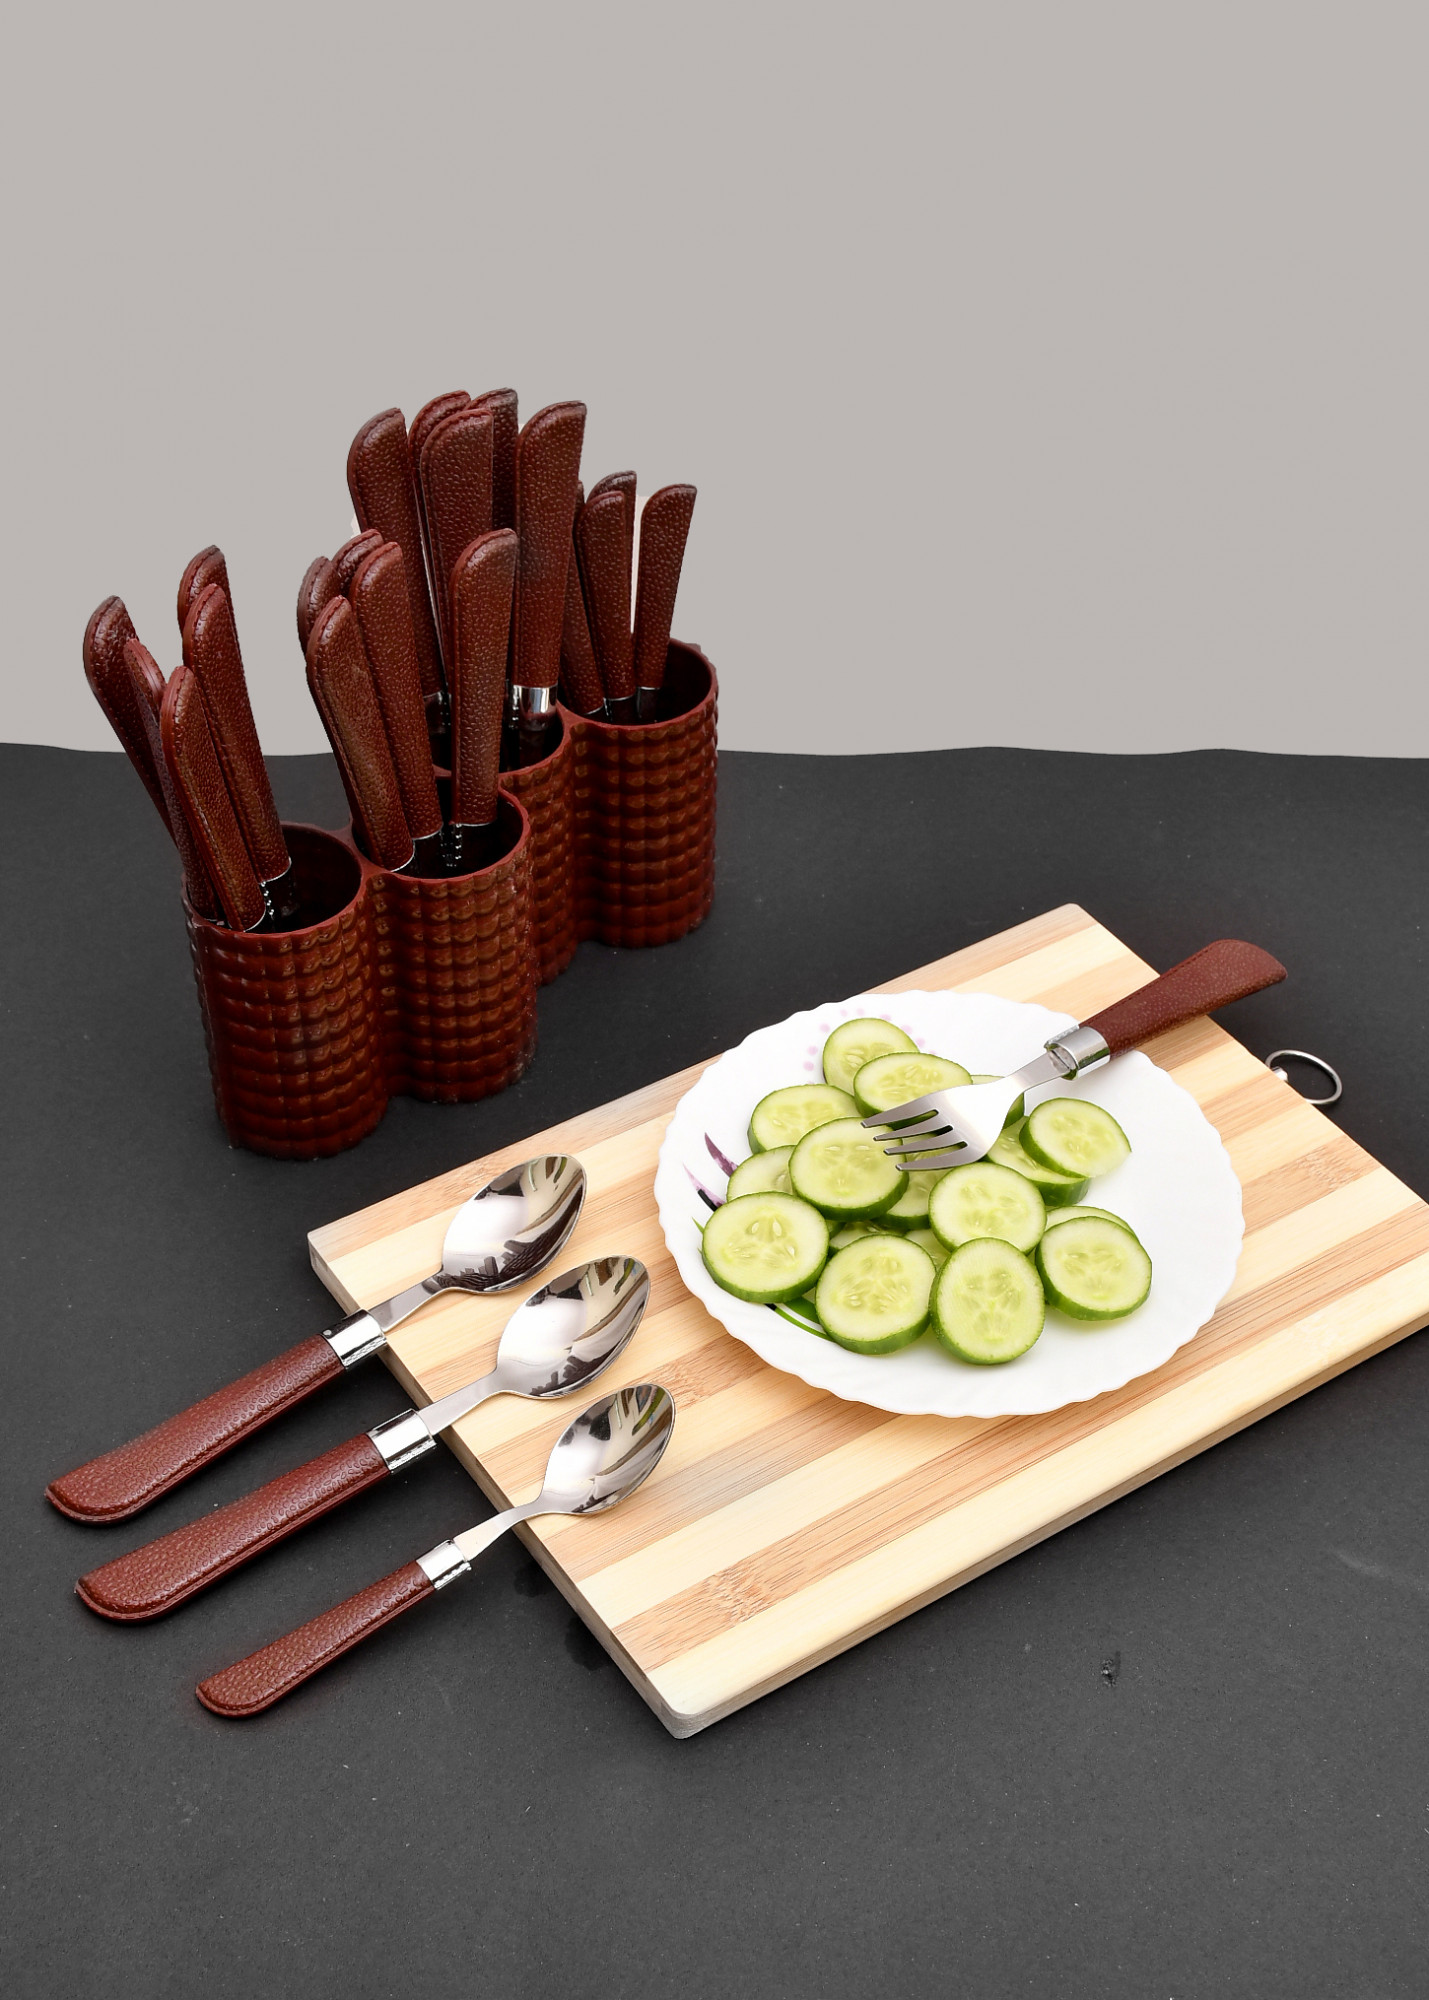 Kuber Industries ABS Plastic & Stainless Steel Nice Cutlery Set, 6 Dessert Spoon, 6 Fork, 6 Soup Spoon, 6 Tea Spoon With 1 Stand (Set of 24, Brown)-KUBMART3300